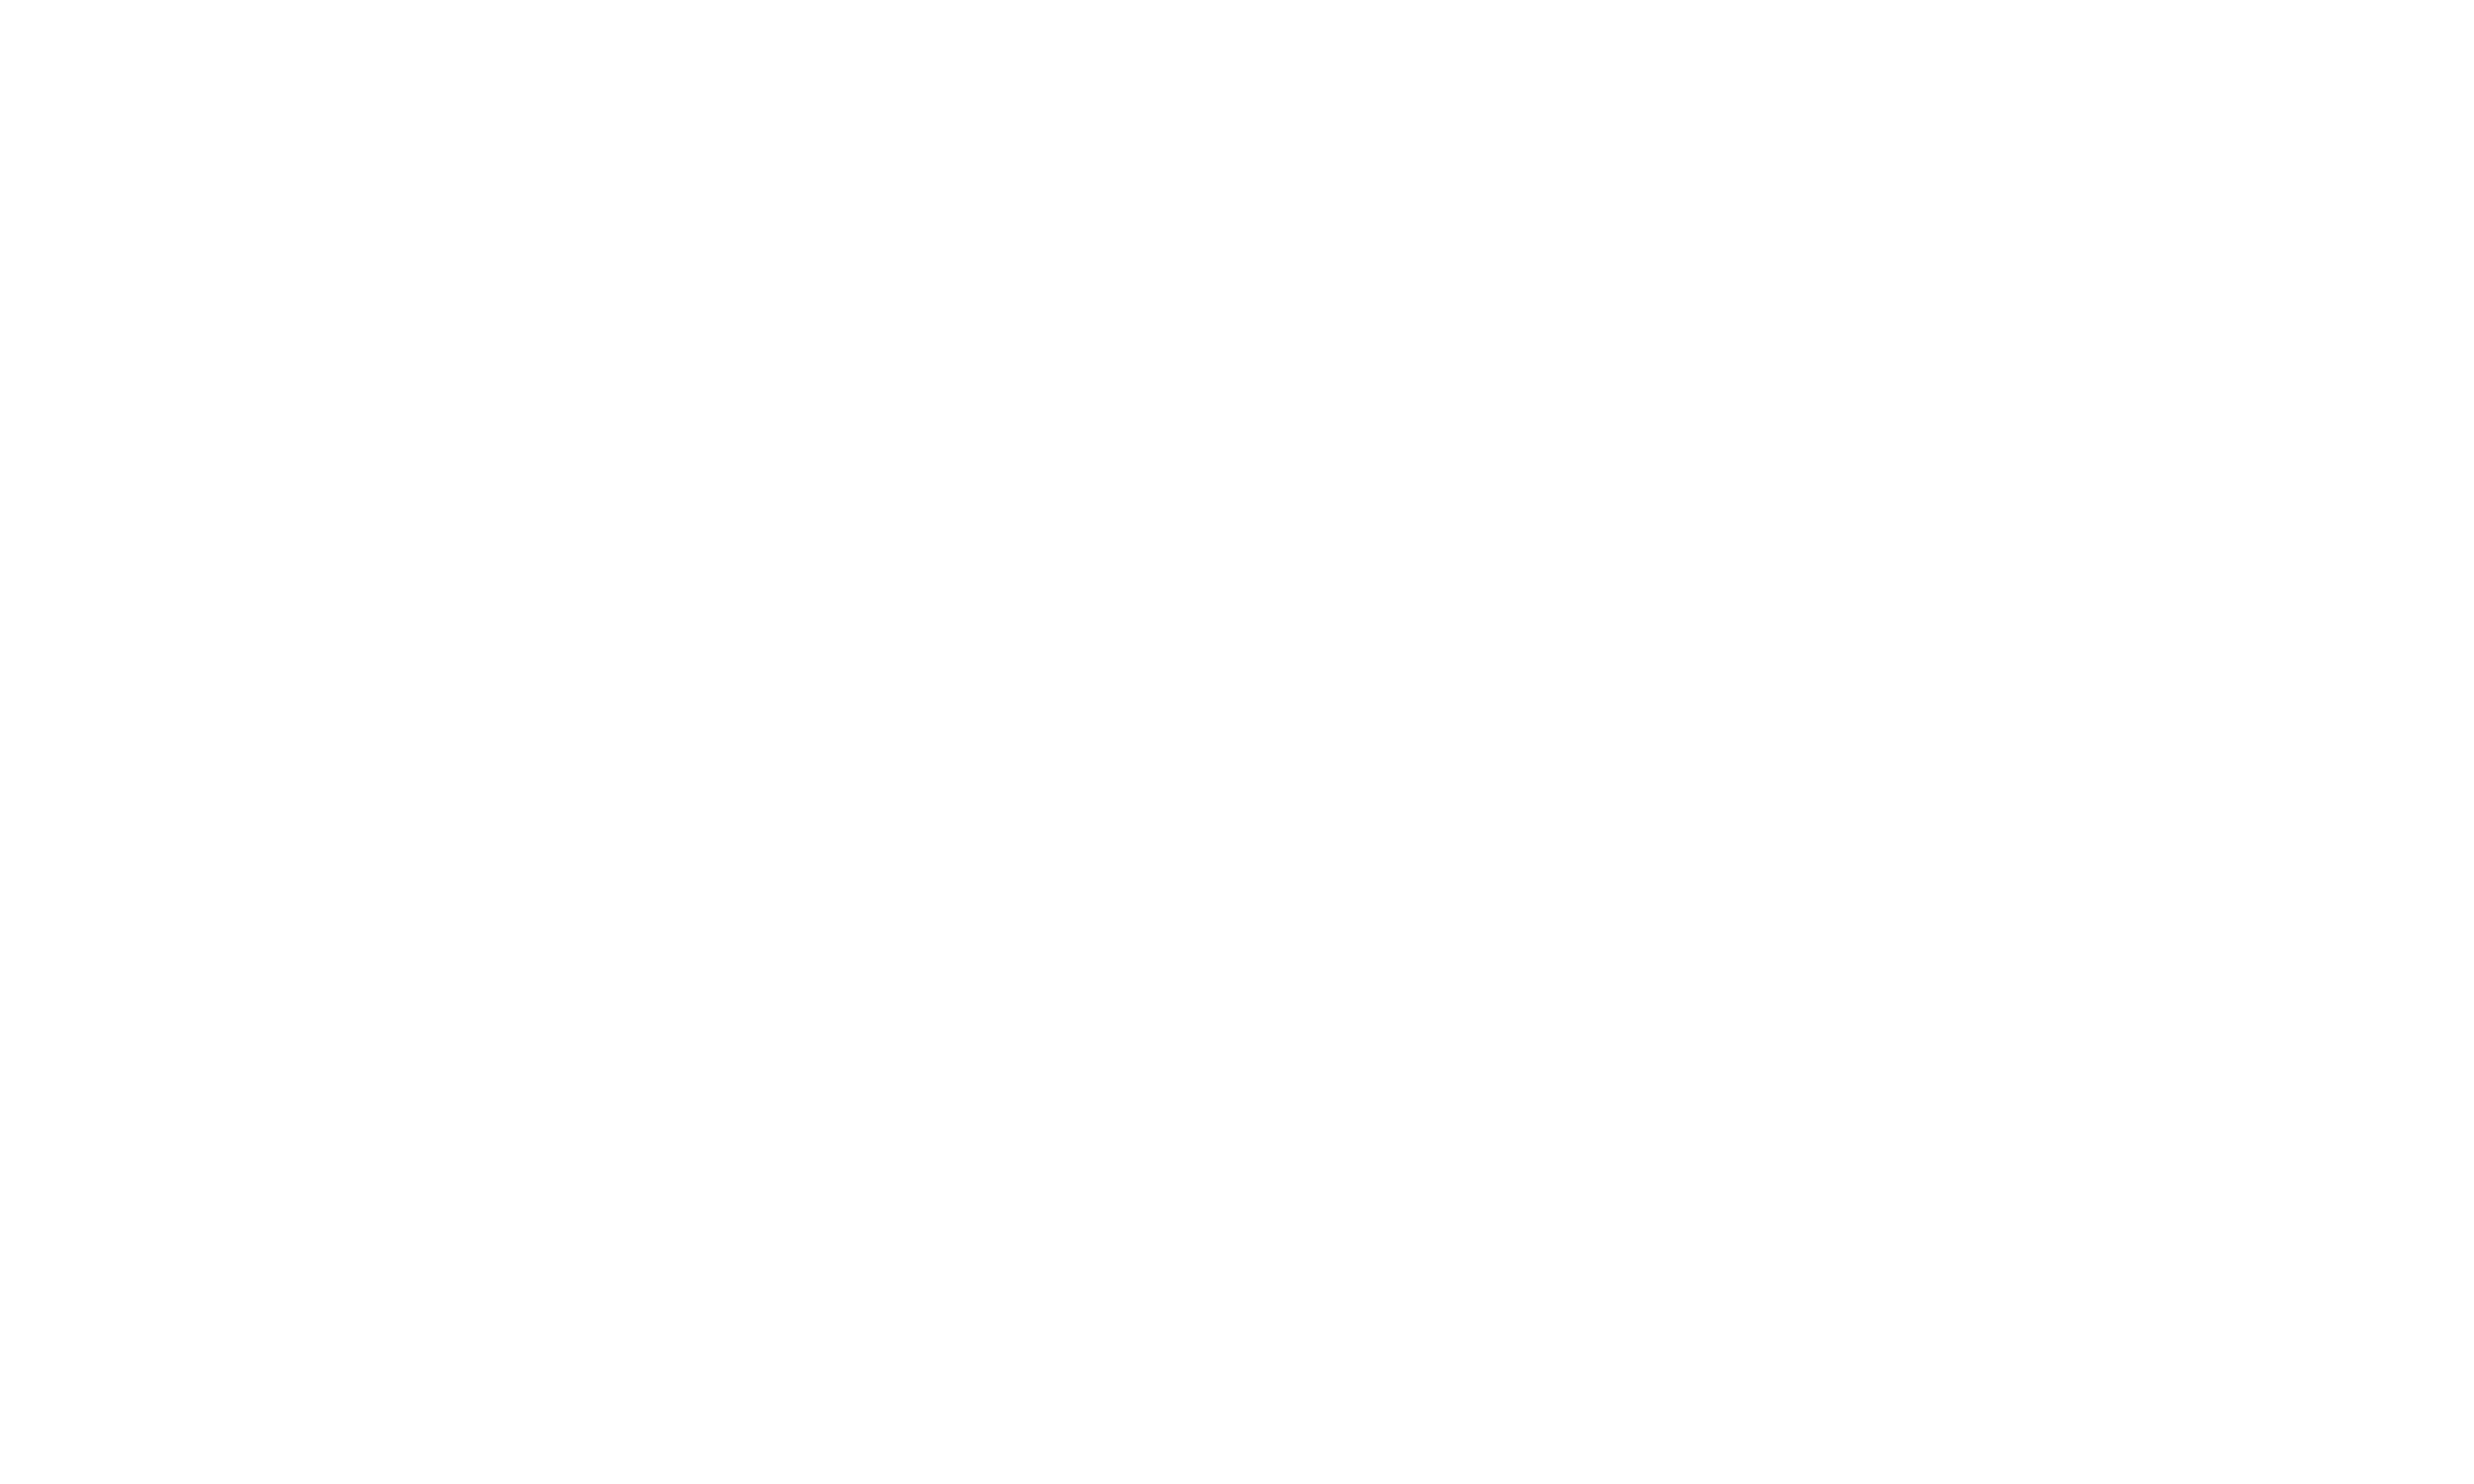 Free Child Rights Foundation